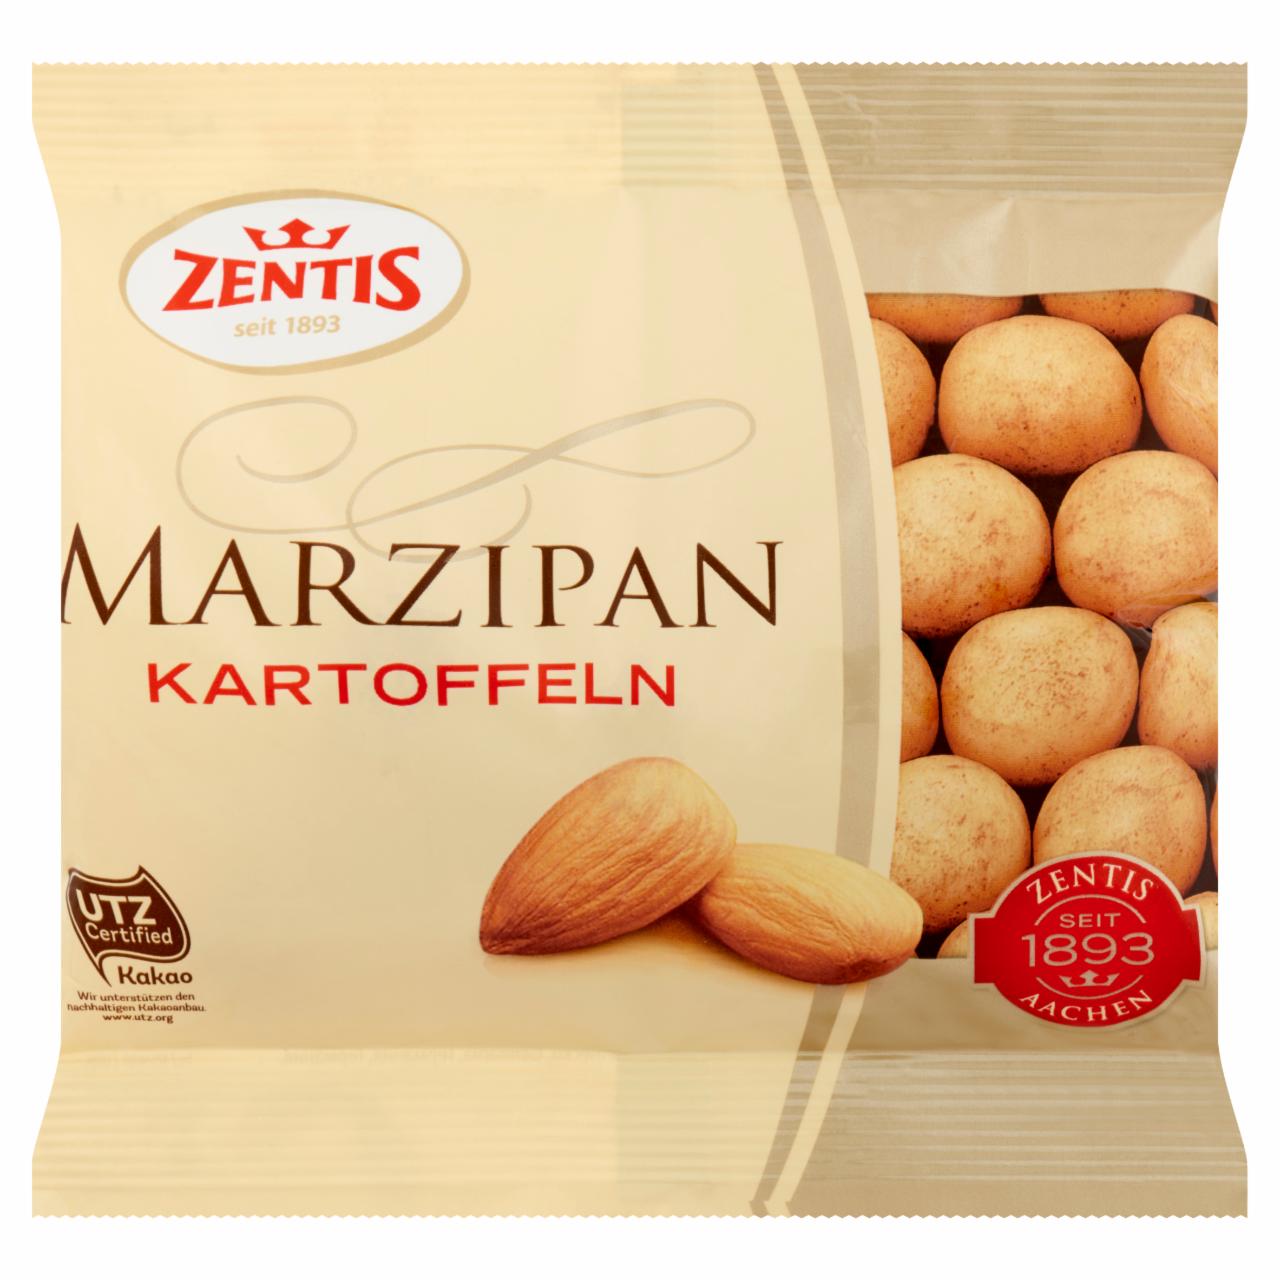 Képek - Zentis kakaóporral bevont marcipán burgonya 100 g